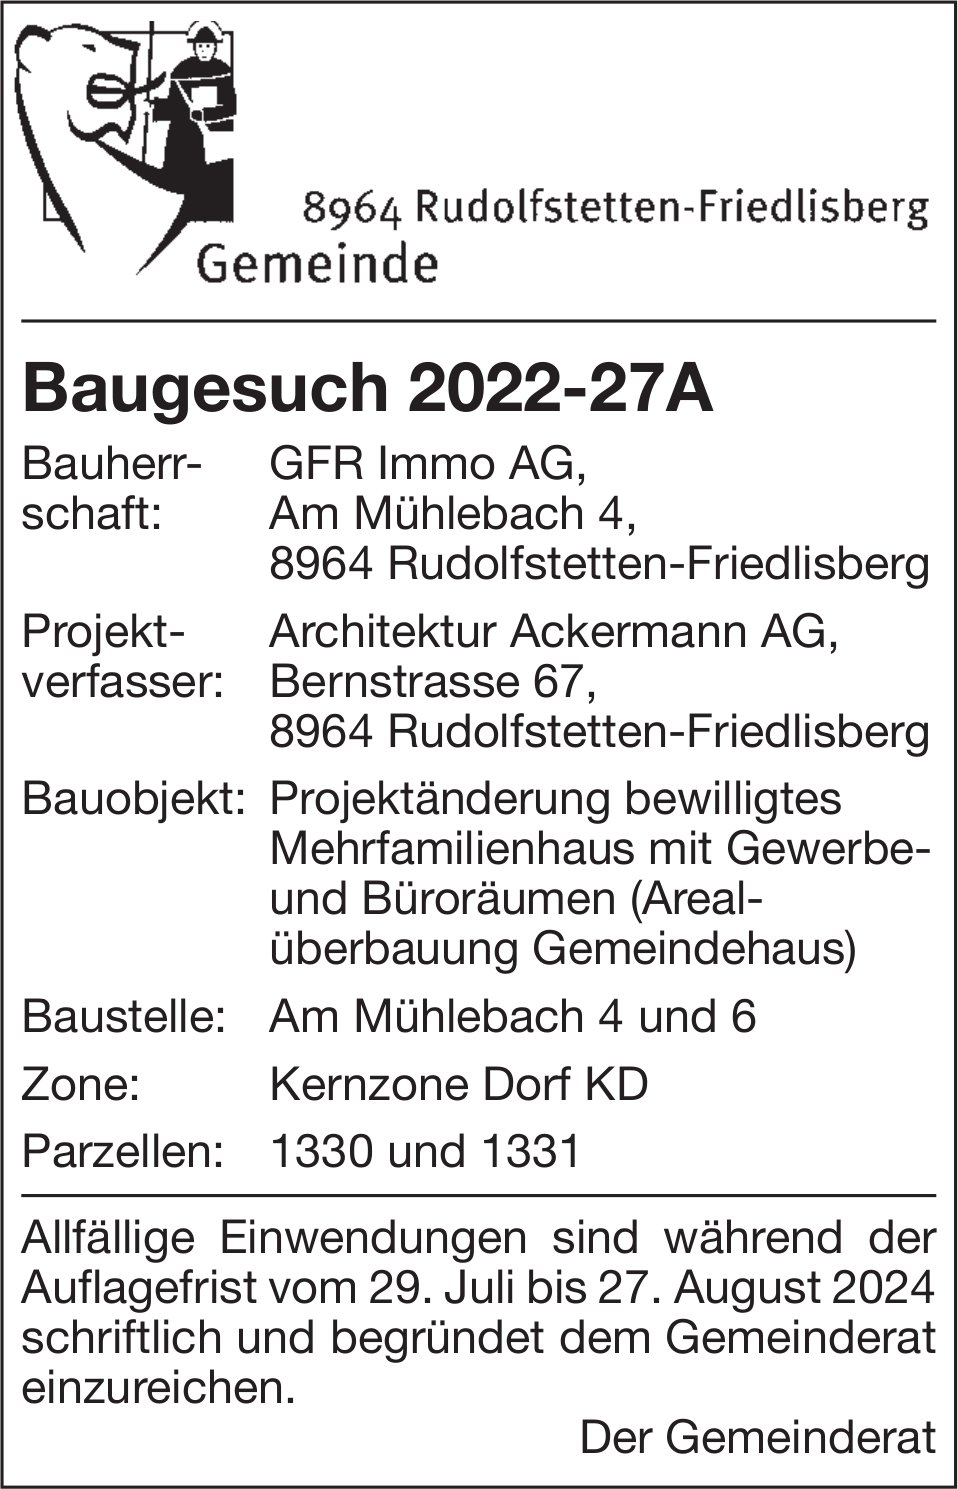 Baugesuche, Rudolfstetten-Friedlisberg - GFR immo AG